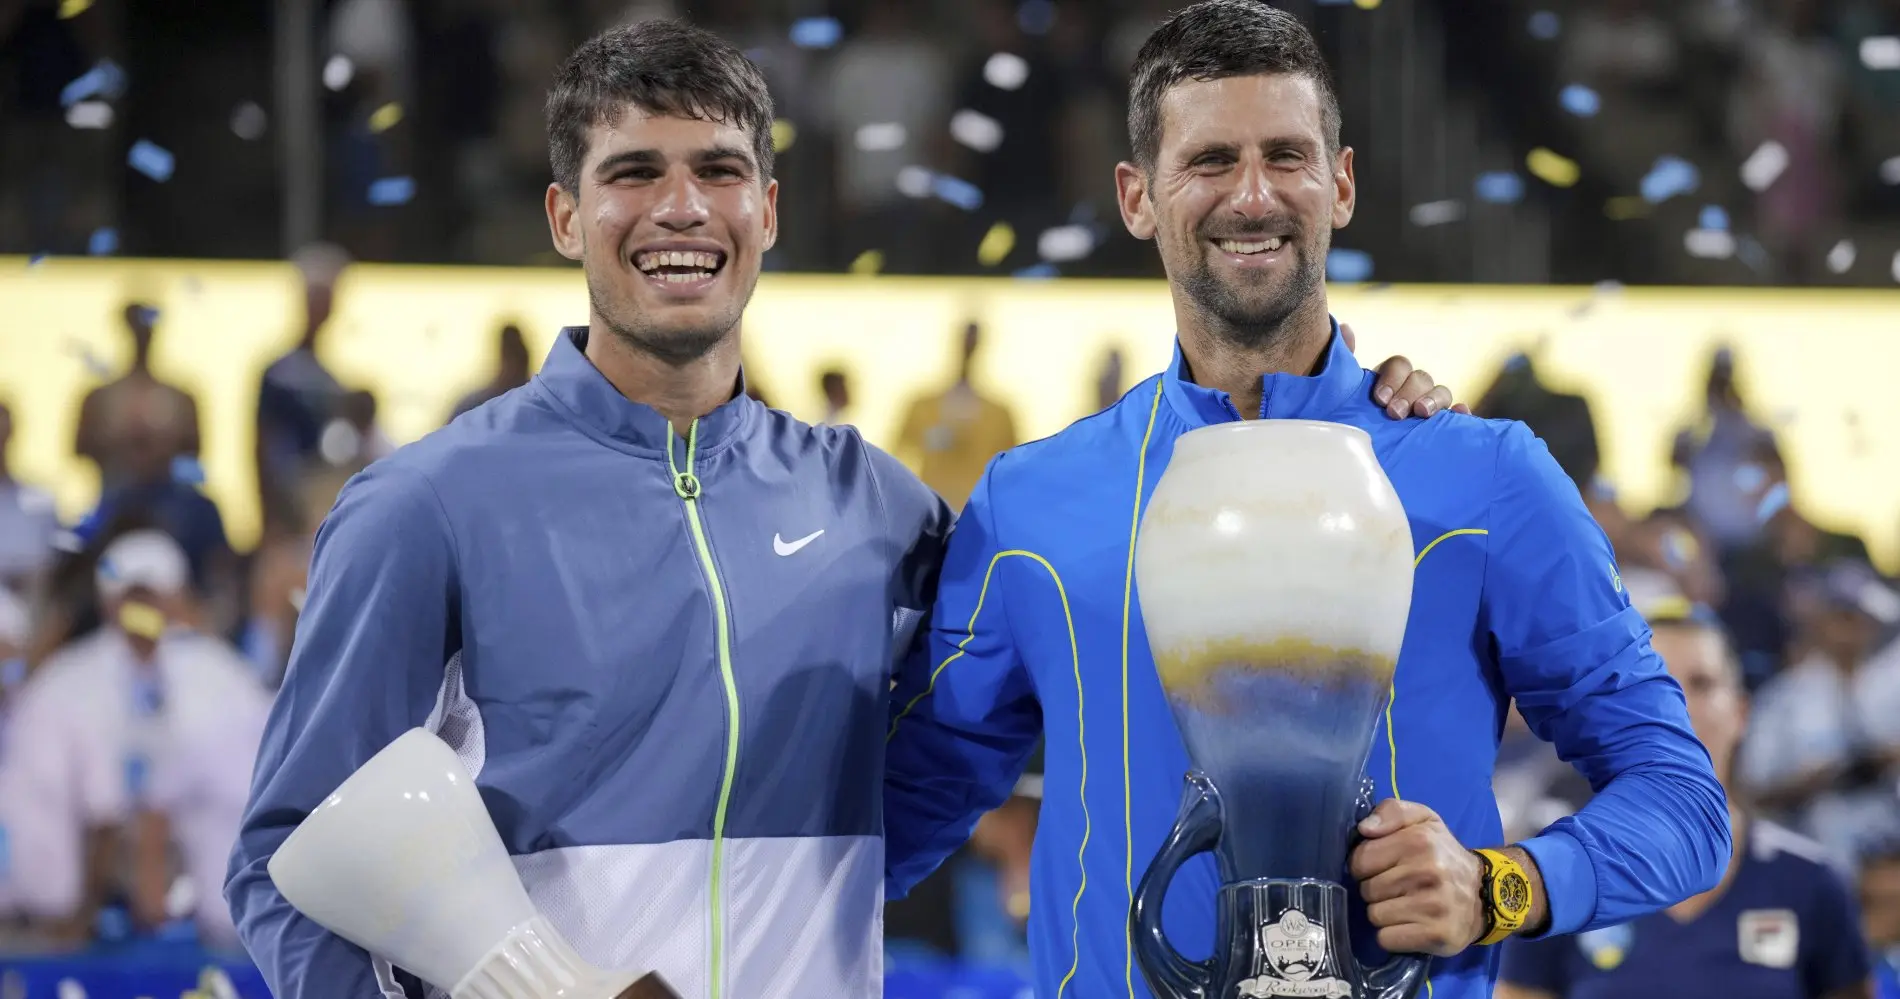 Novak Djokovic and Carlos Alcaraz in the Cincinnati Masters podium after Djokovic defeated Alcaraz in the third set